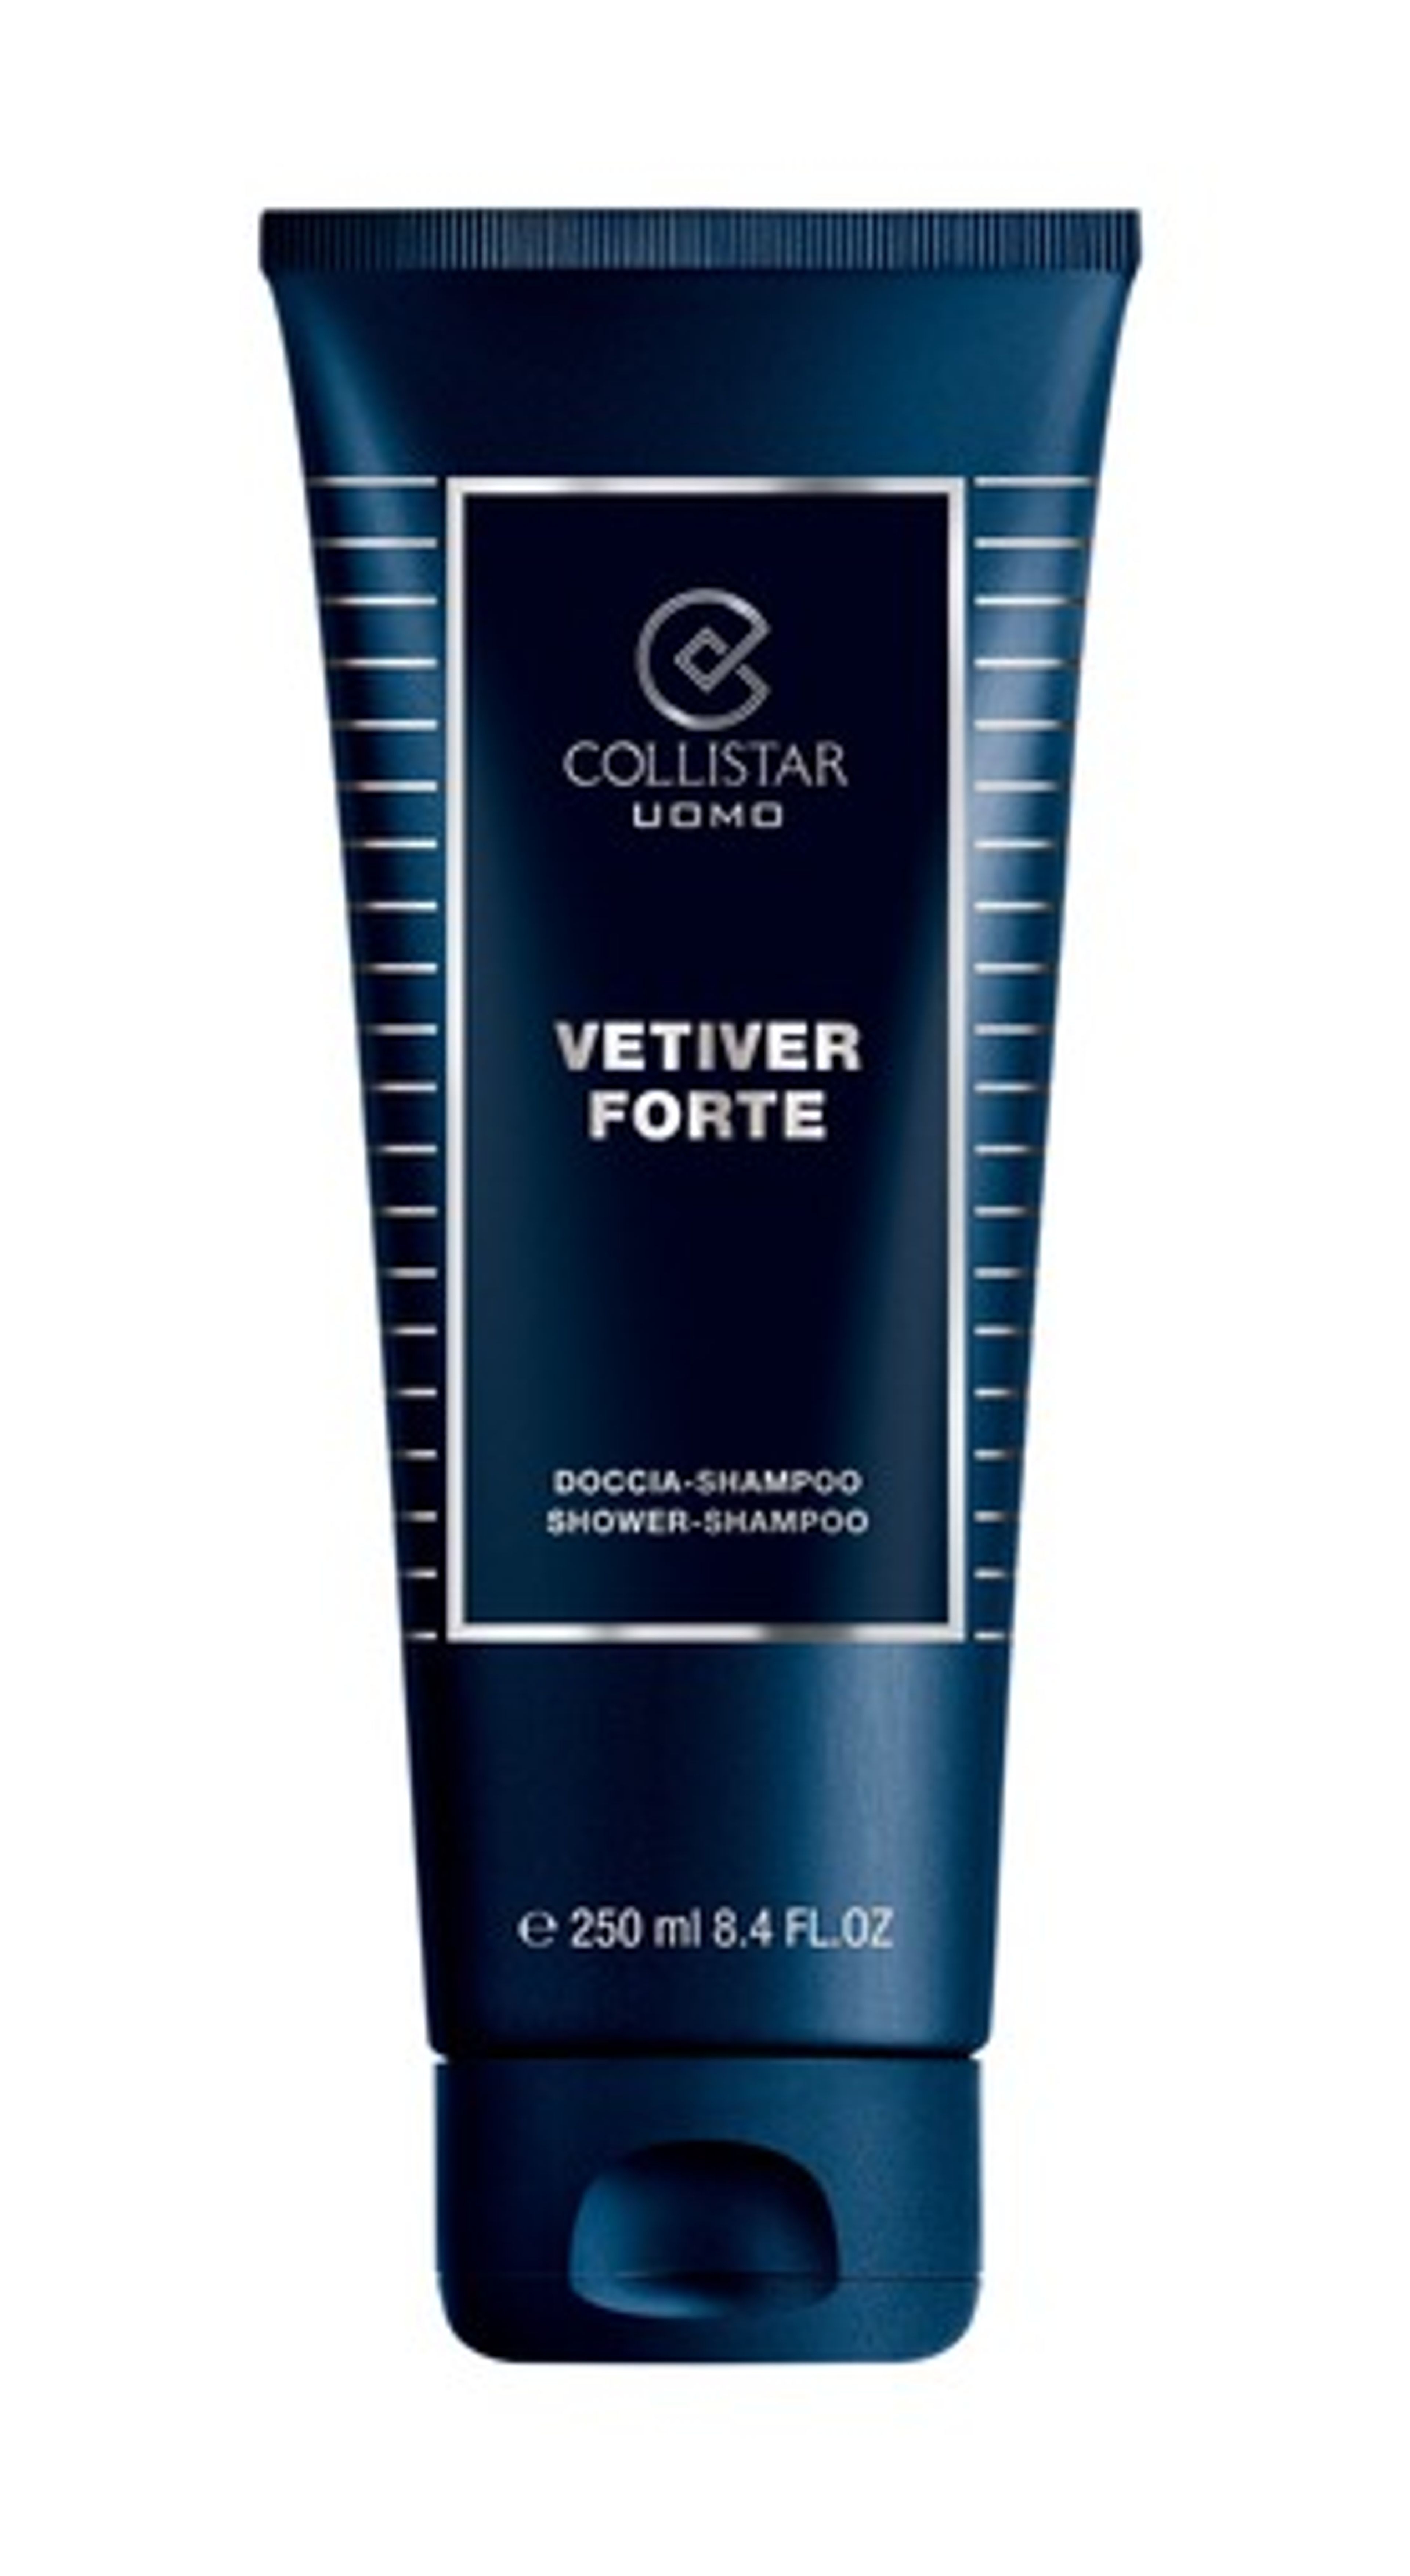 Collistar Vetiver Forte Doccia-shampoo 1